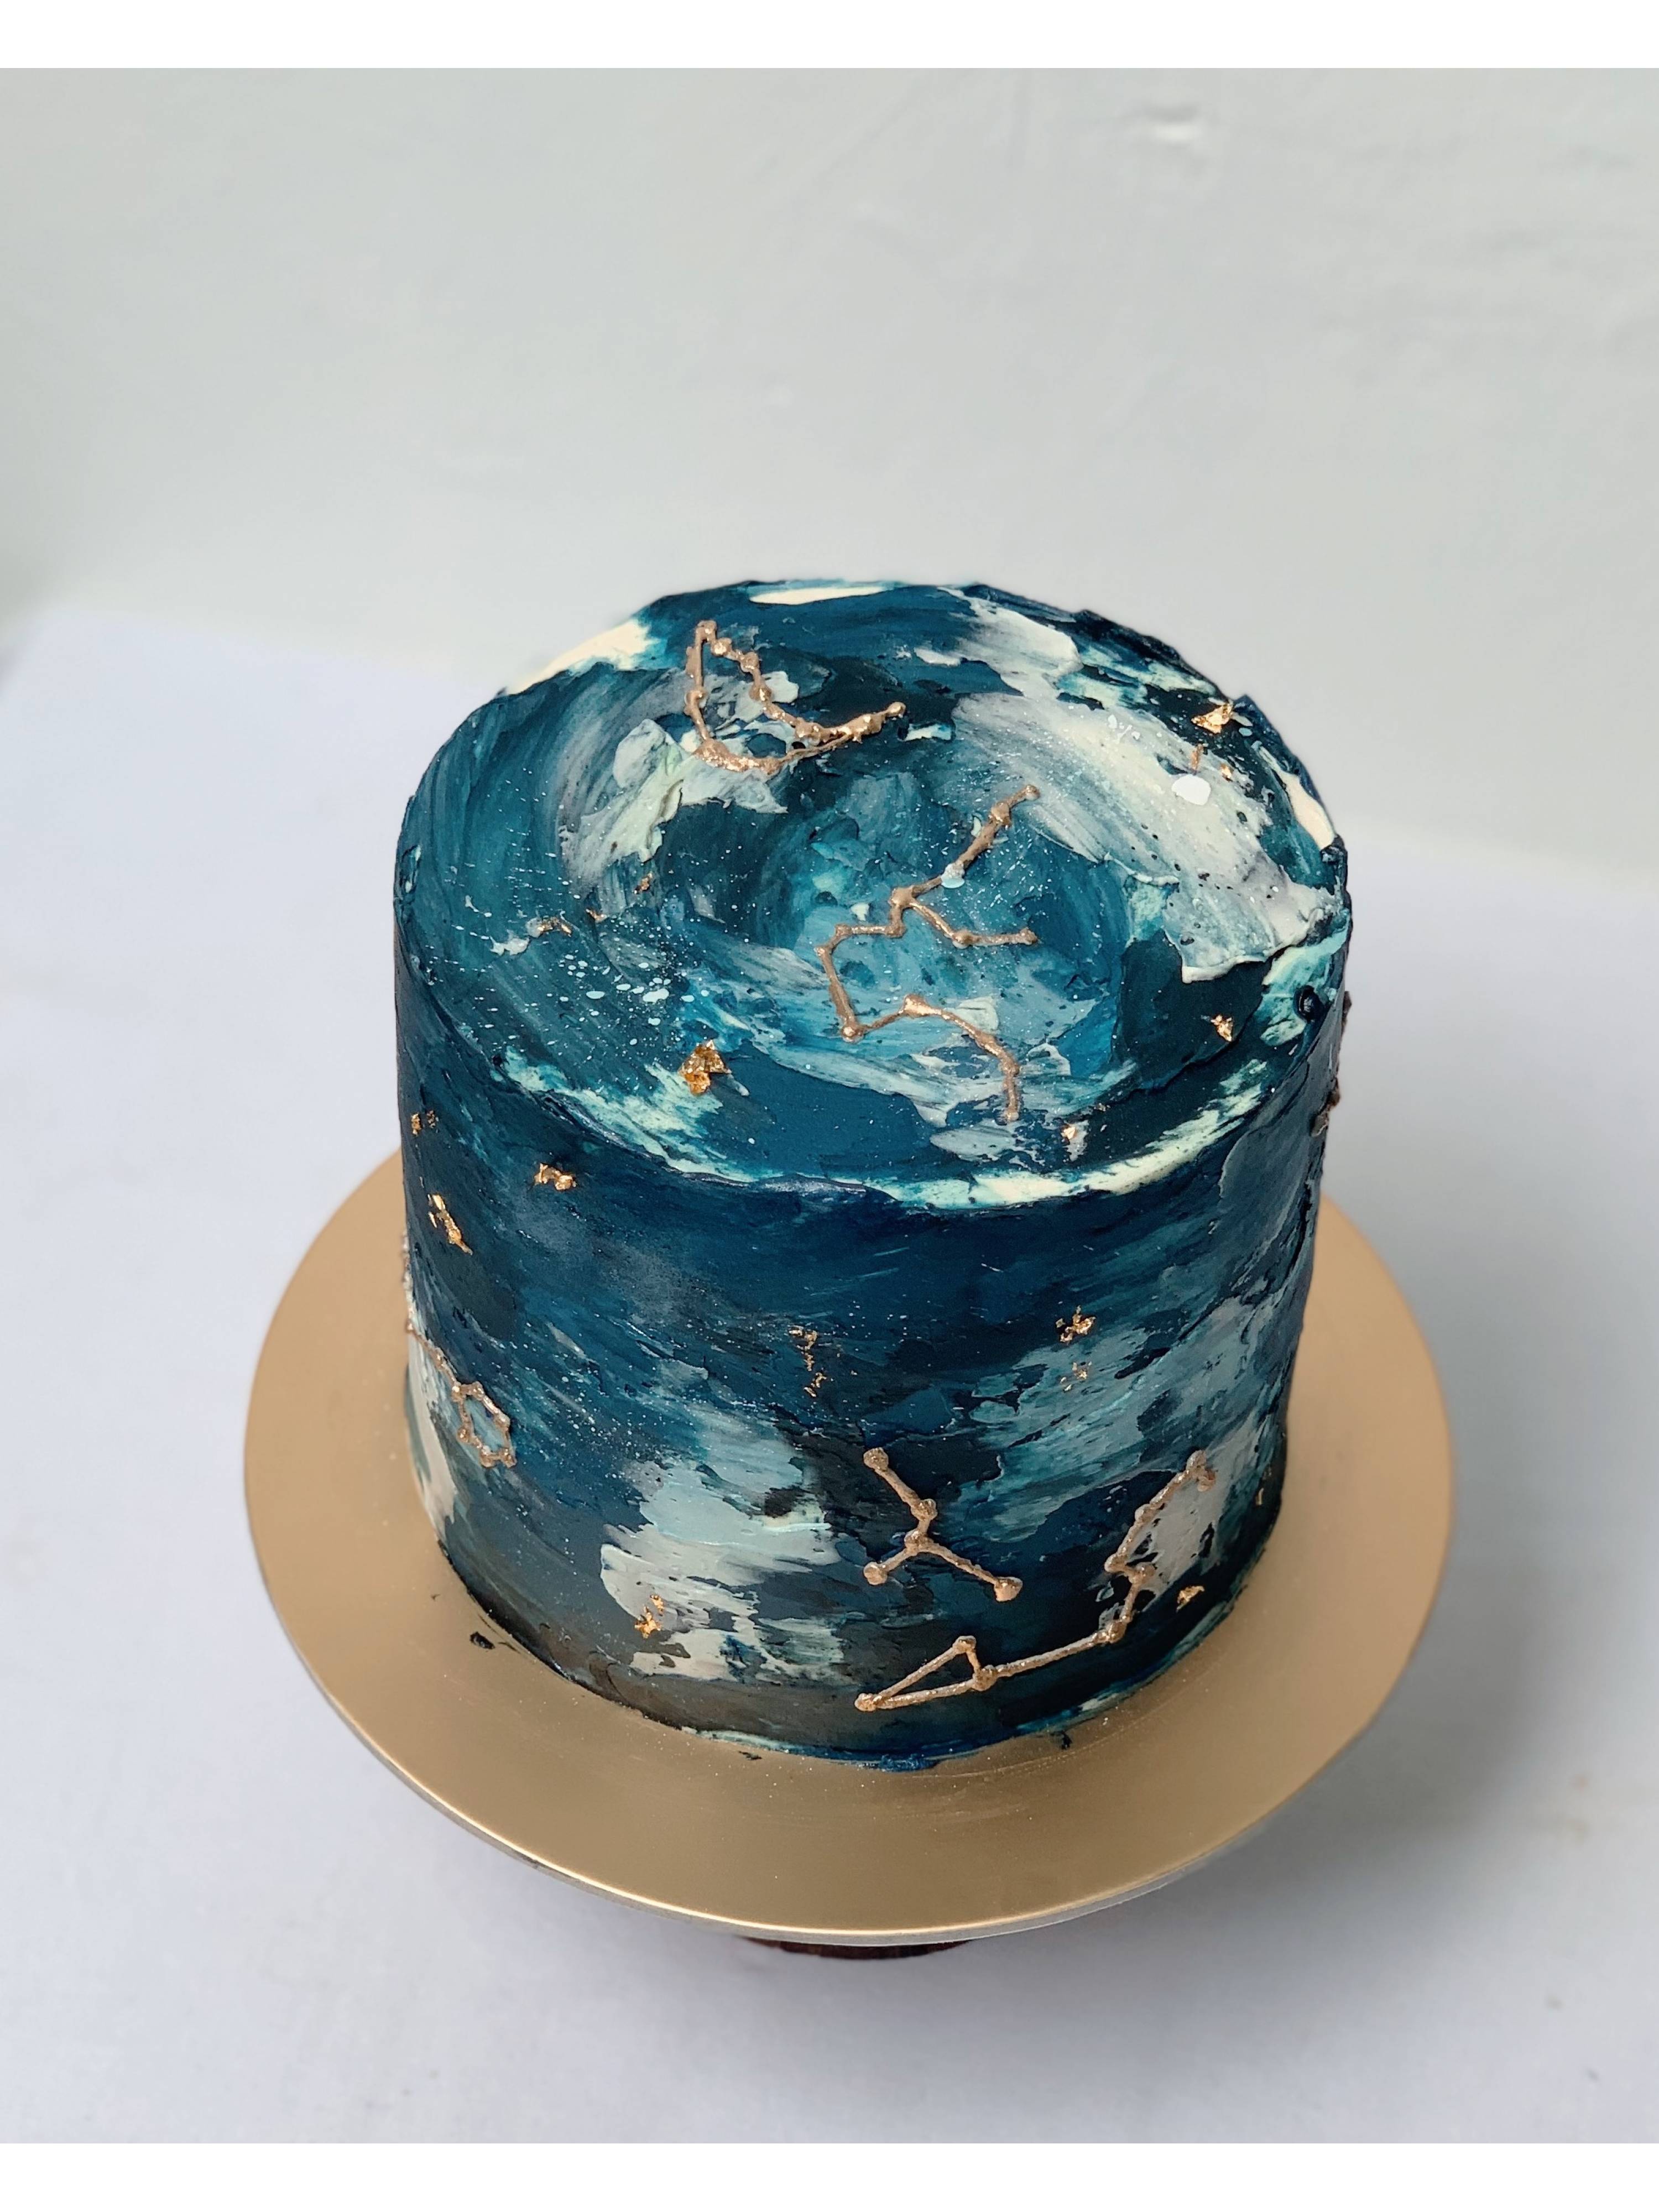 G3. Constellation Cake